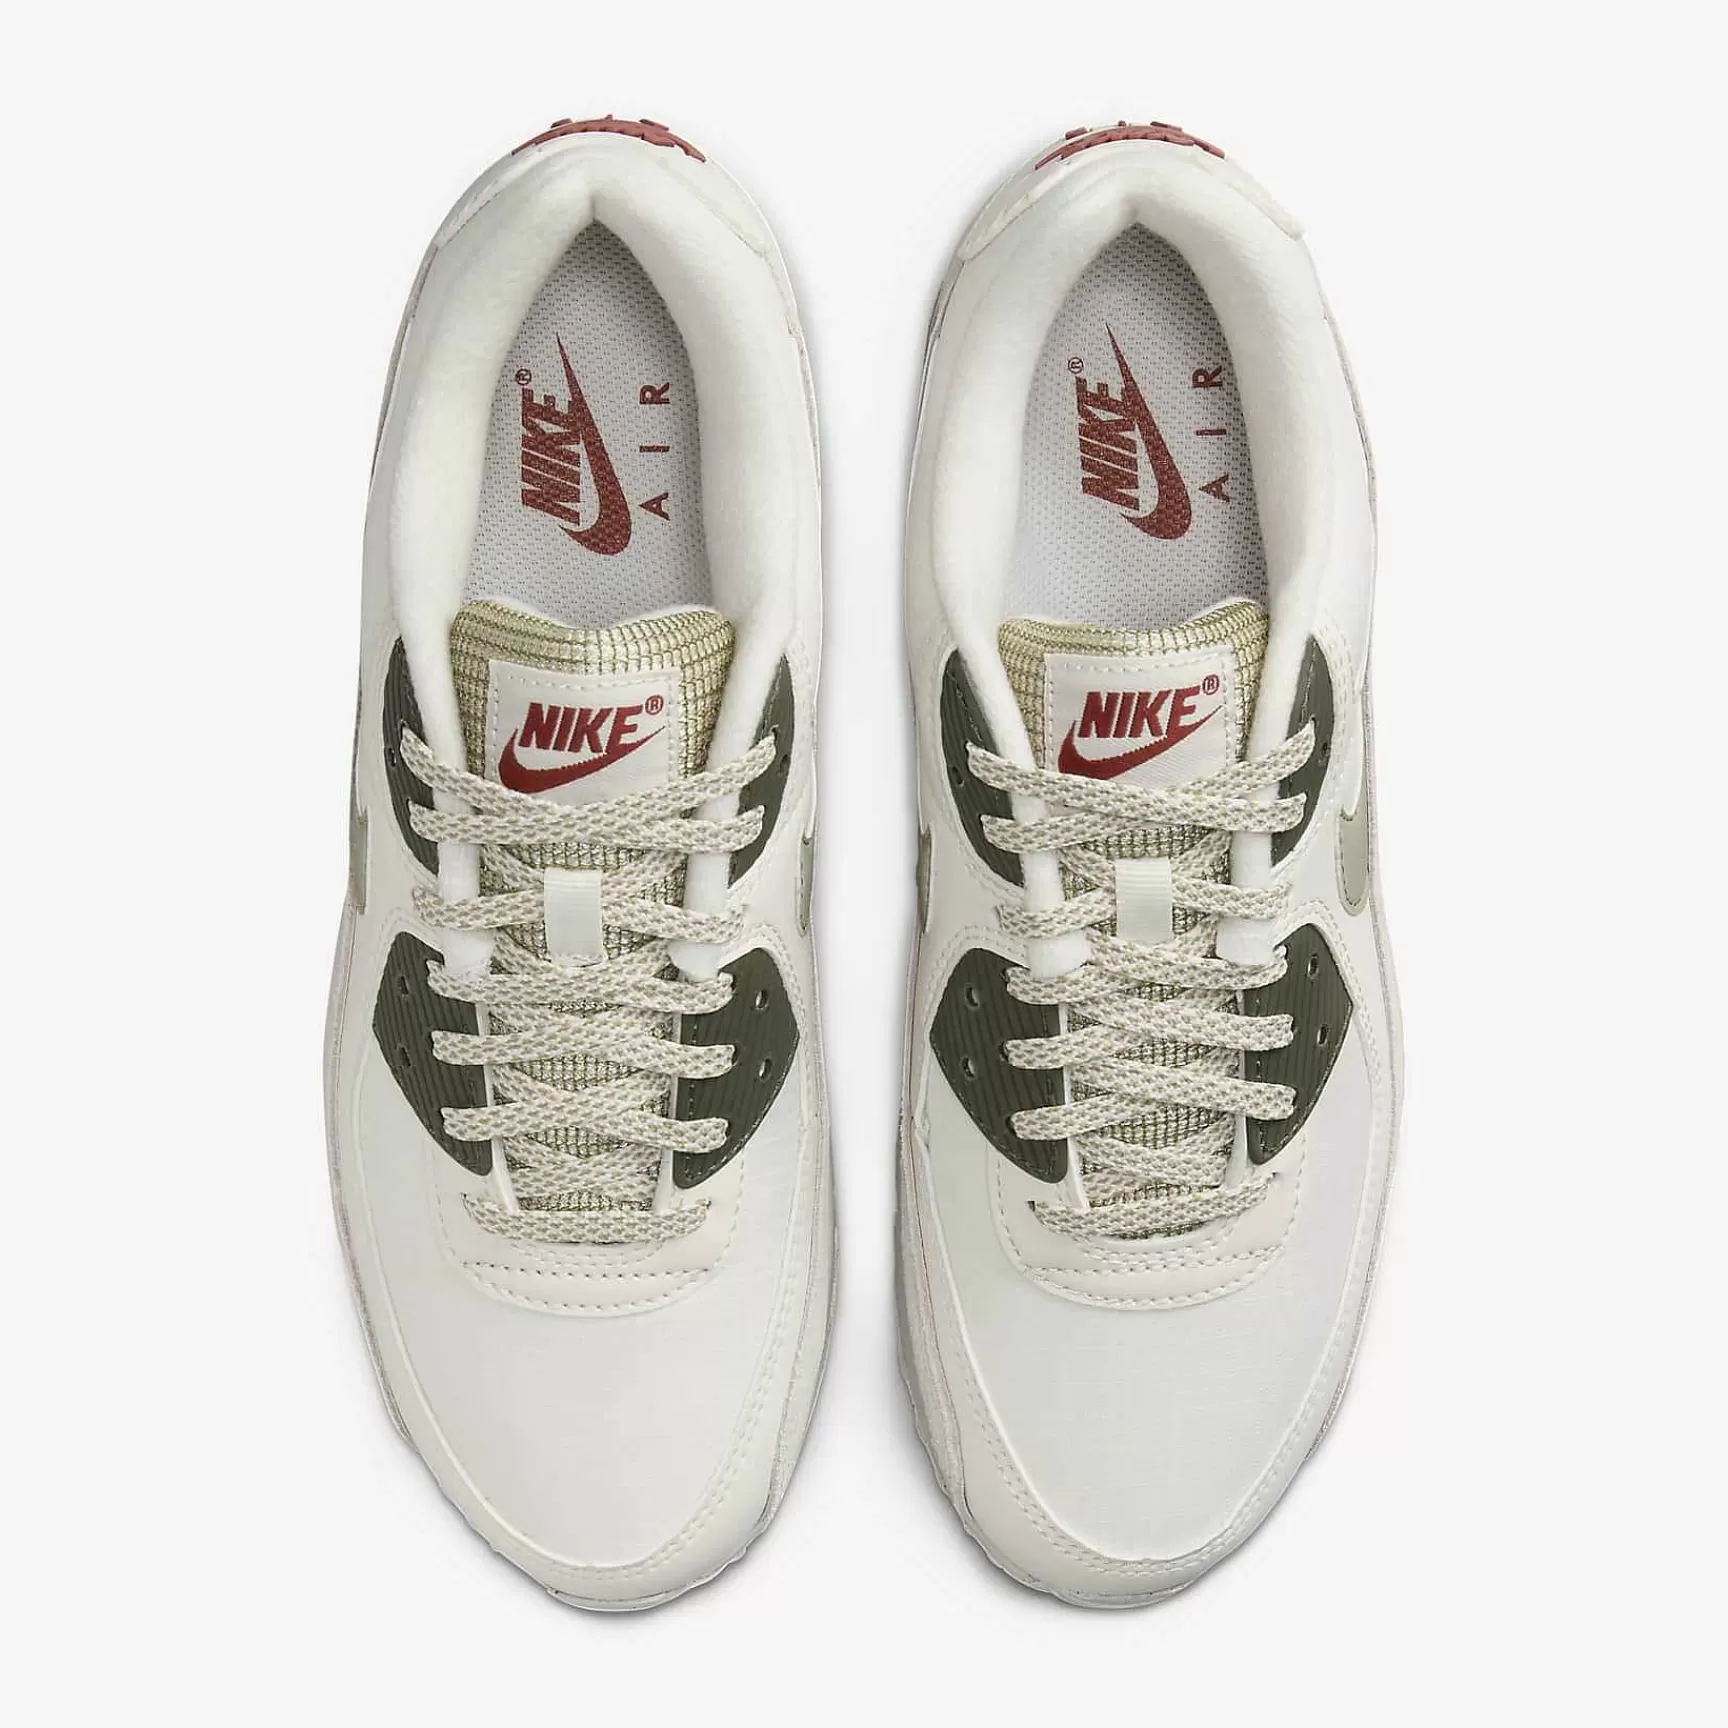 Herren Nike Cyber Monday-Schuhe | Air Max 90